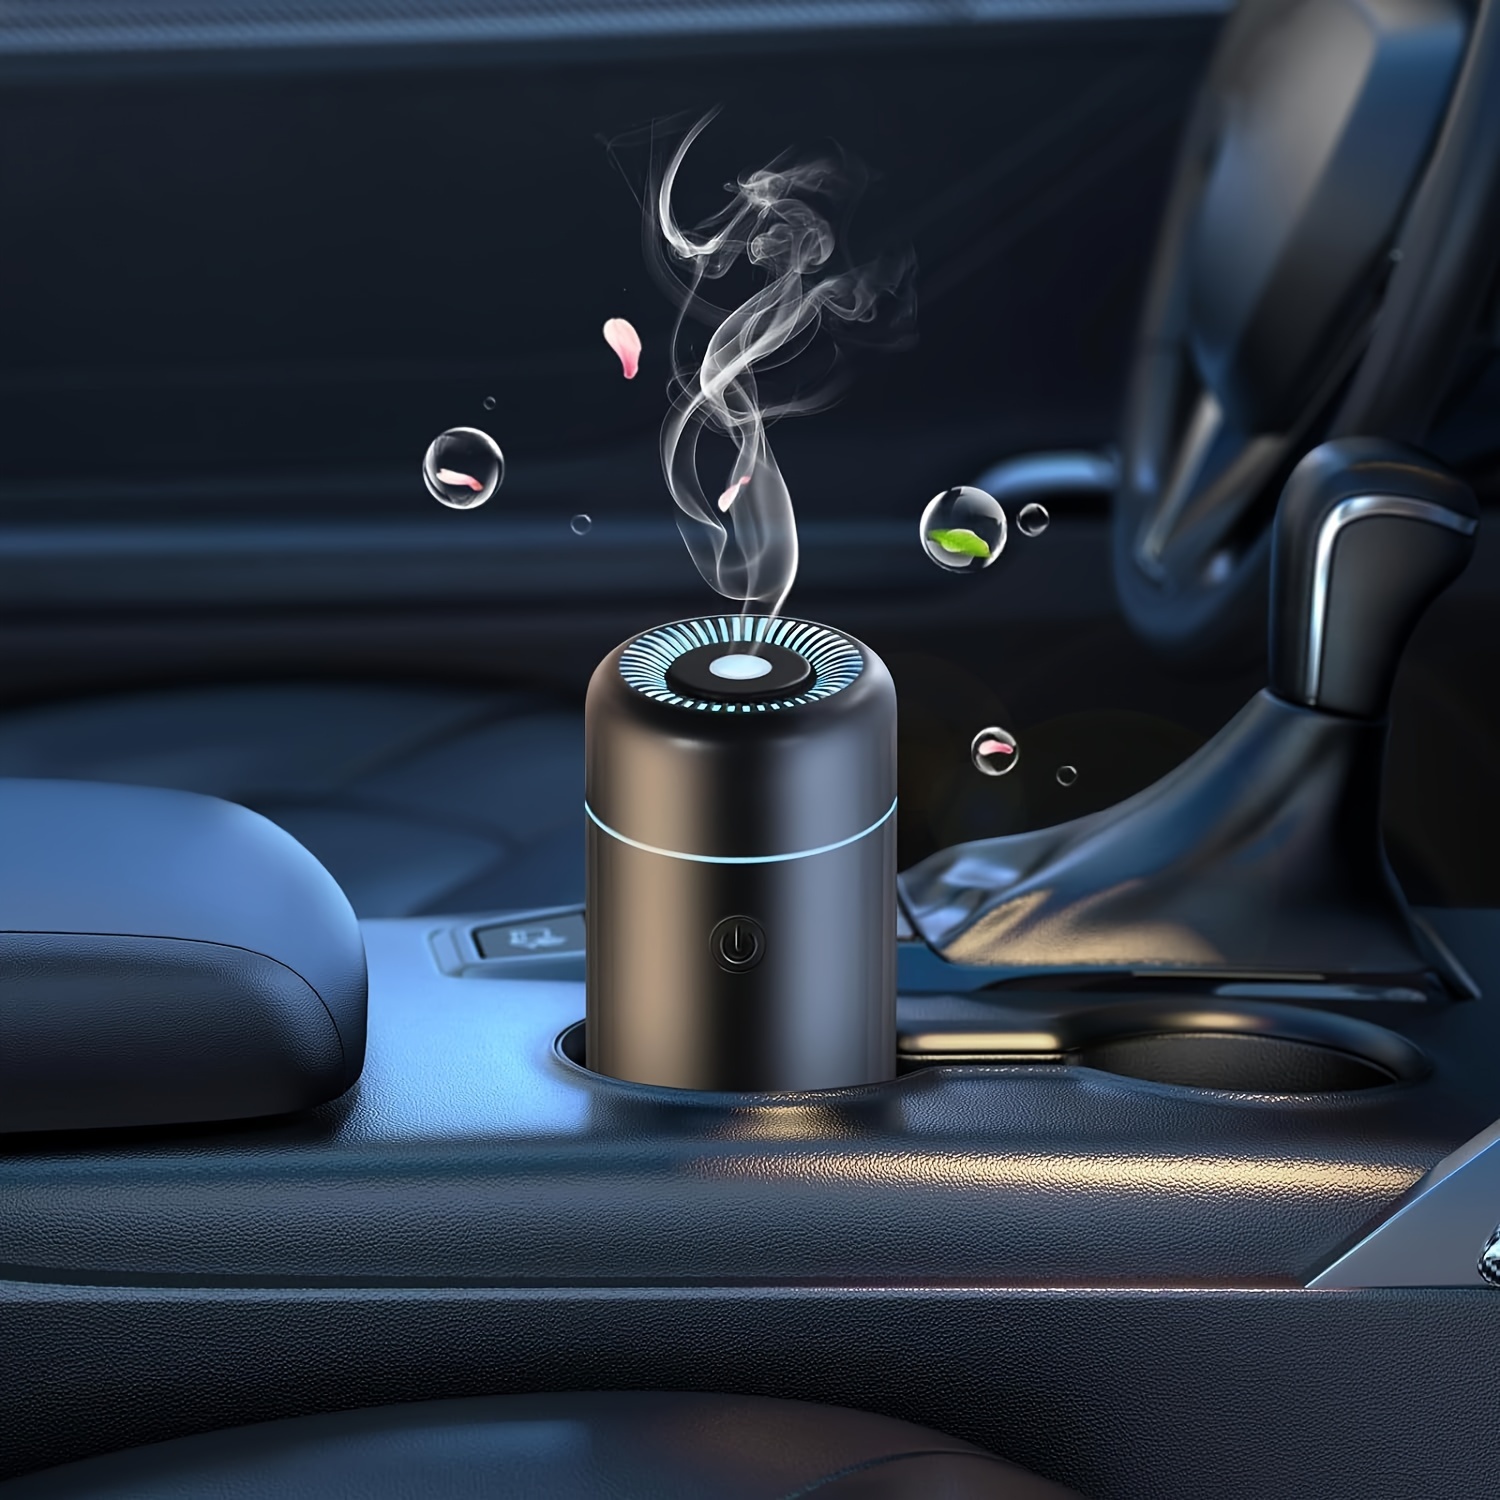 

1pc Car Diffuser Humidifier, Aroma Essential Oil Diffuser, Usb Cool Mist Mini Portable Diffuser For Car Home Office Bedroom